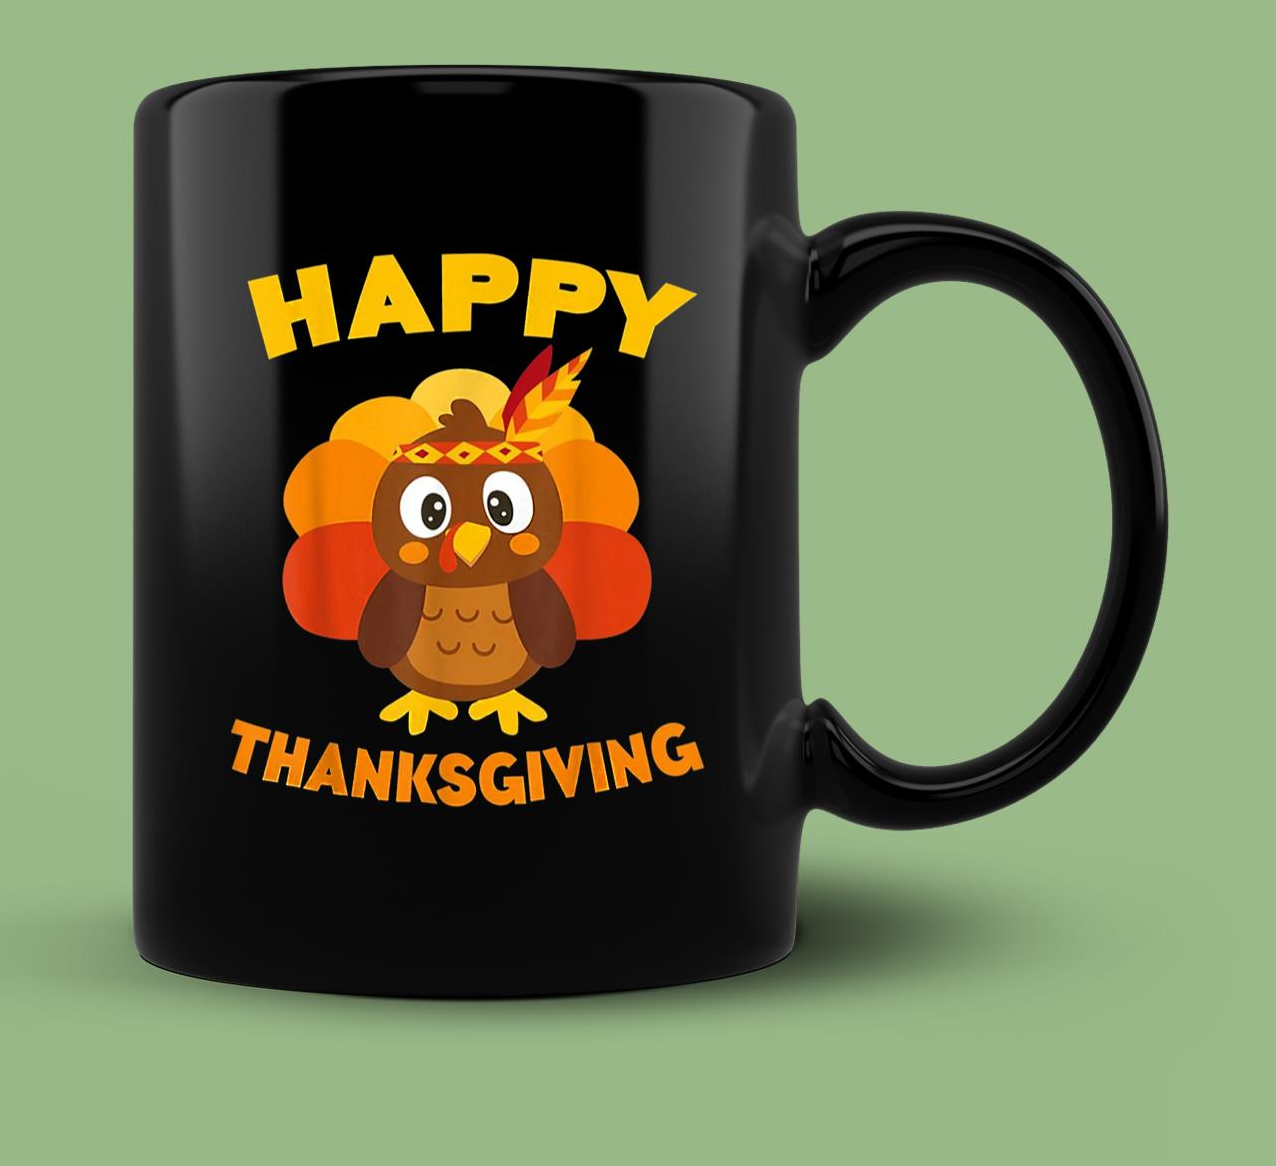 Skitongift Ceramic Novelty Coffee Mug Funny Thanksgiving Mug Happy Thanksgiving